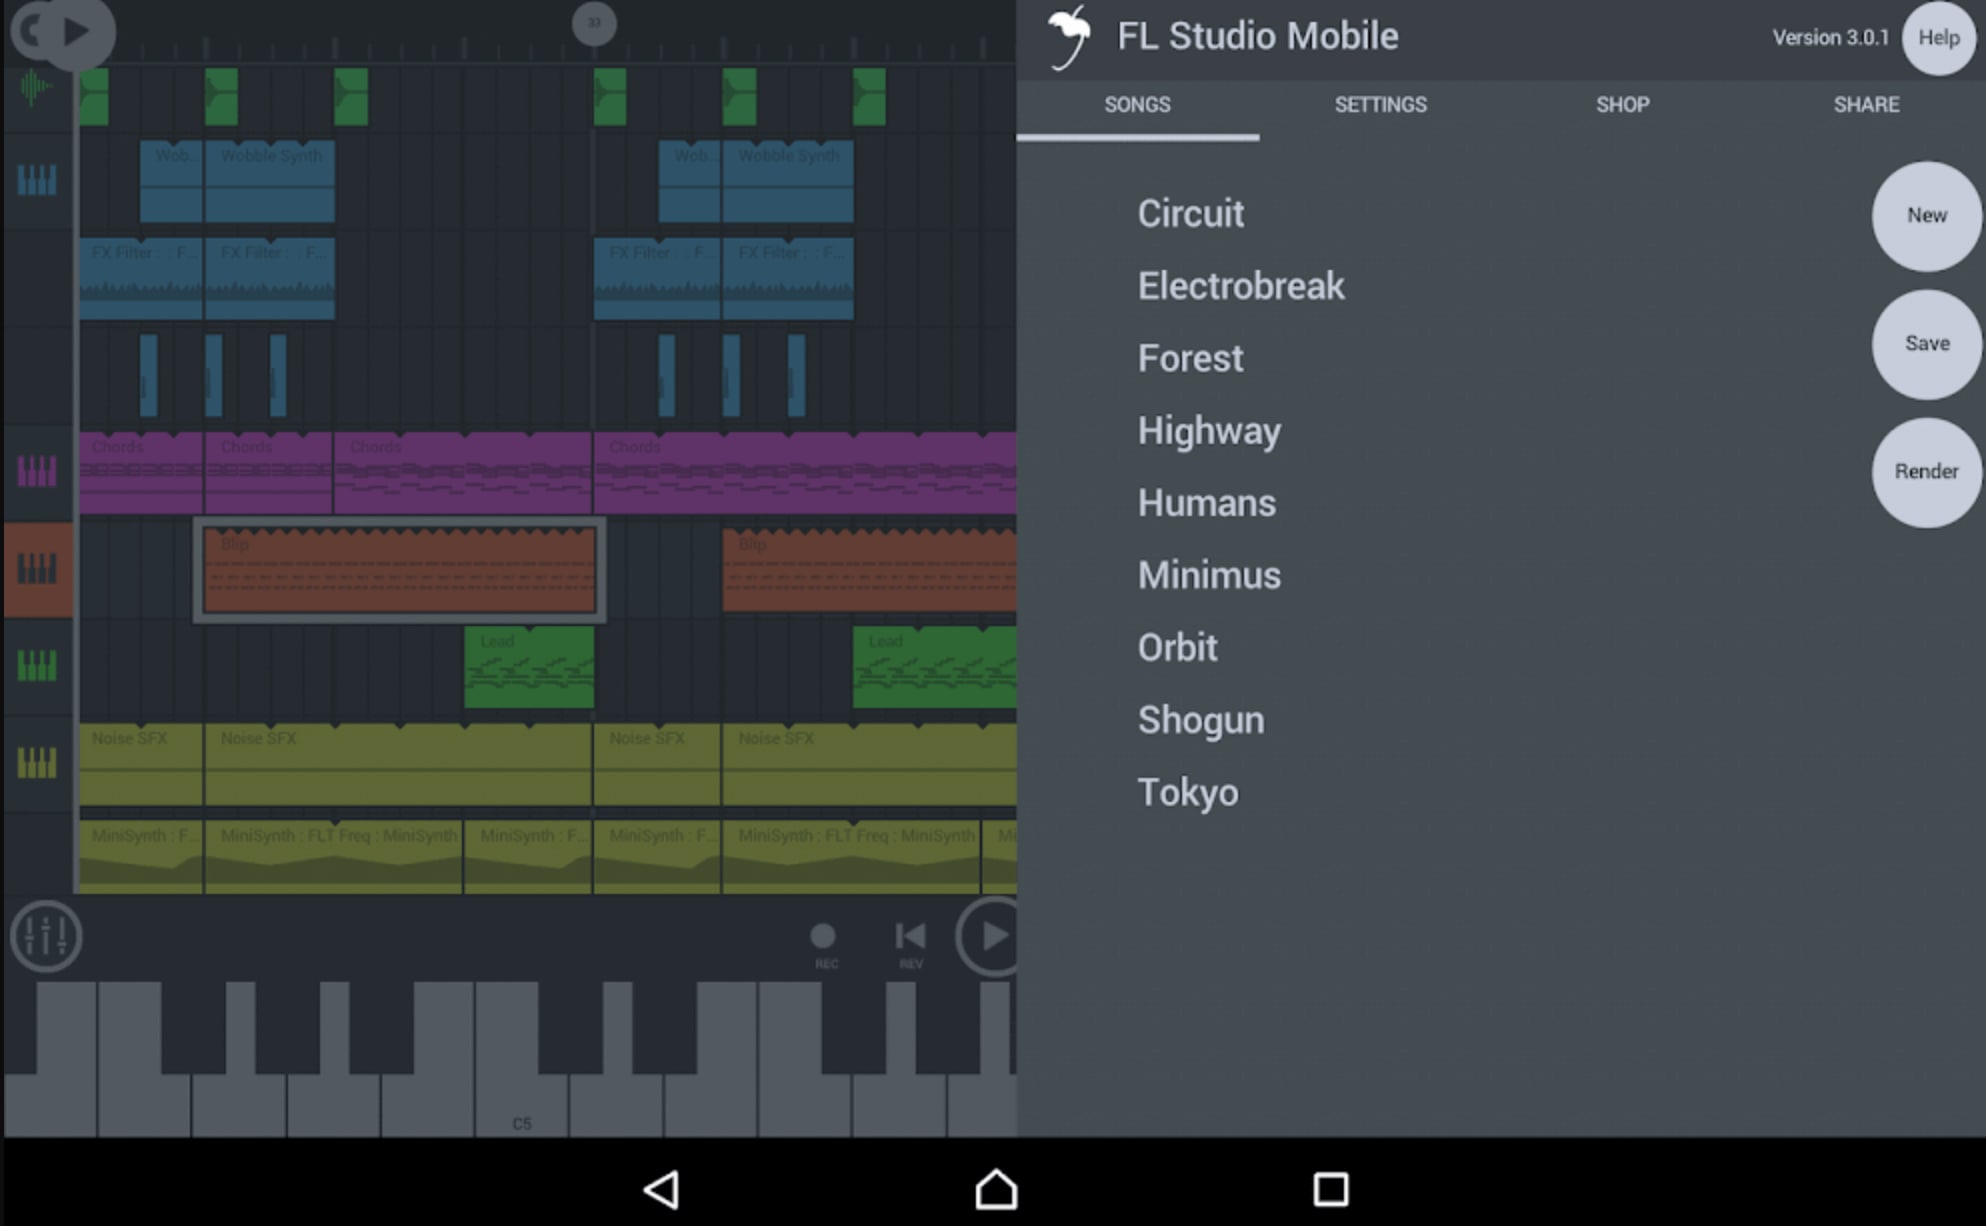 аудиоредактор для Android - FL Studio Mobile 